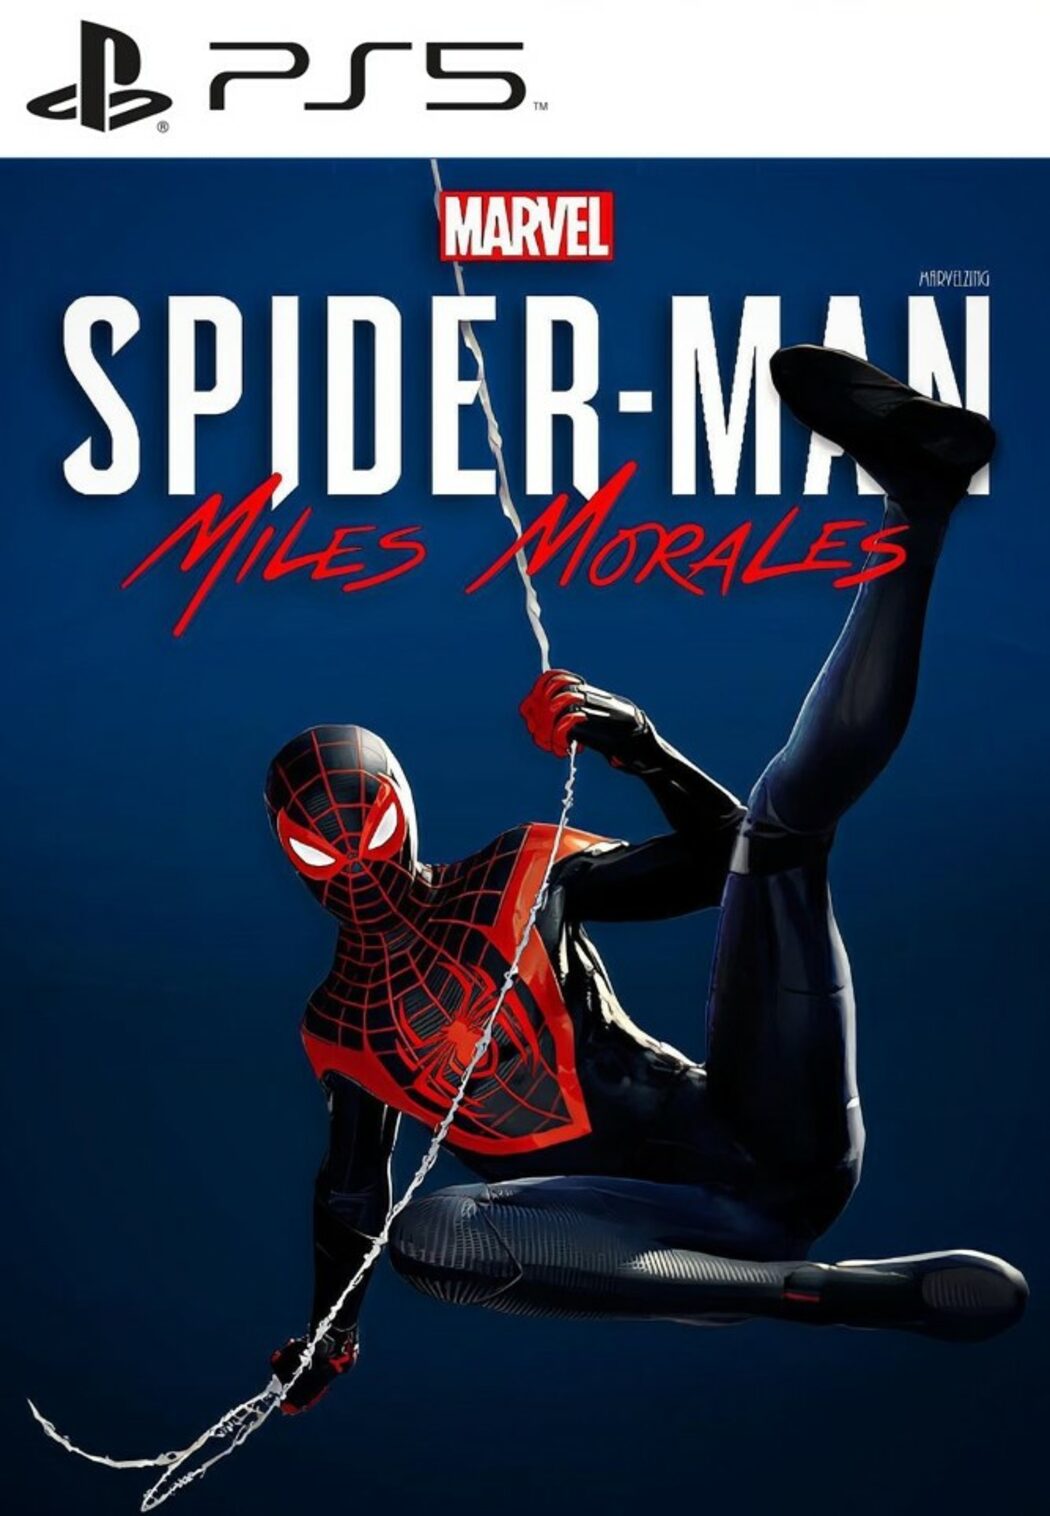 Buy Marvel's Spider-Man 2 - Pre-order Bonus (DLC) PSN key! Cheap price